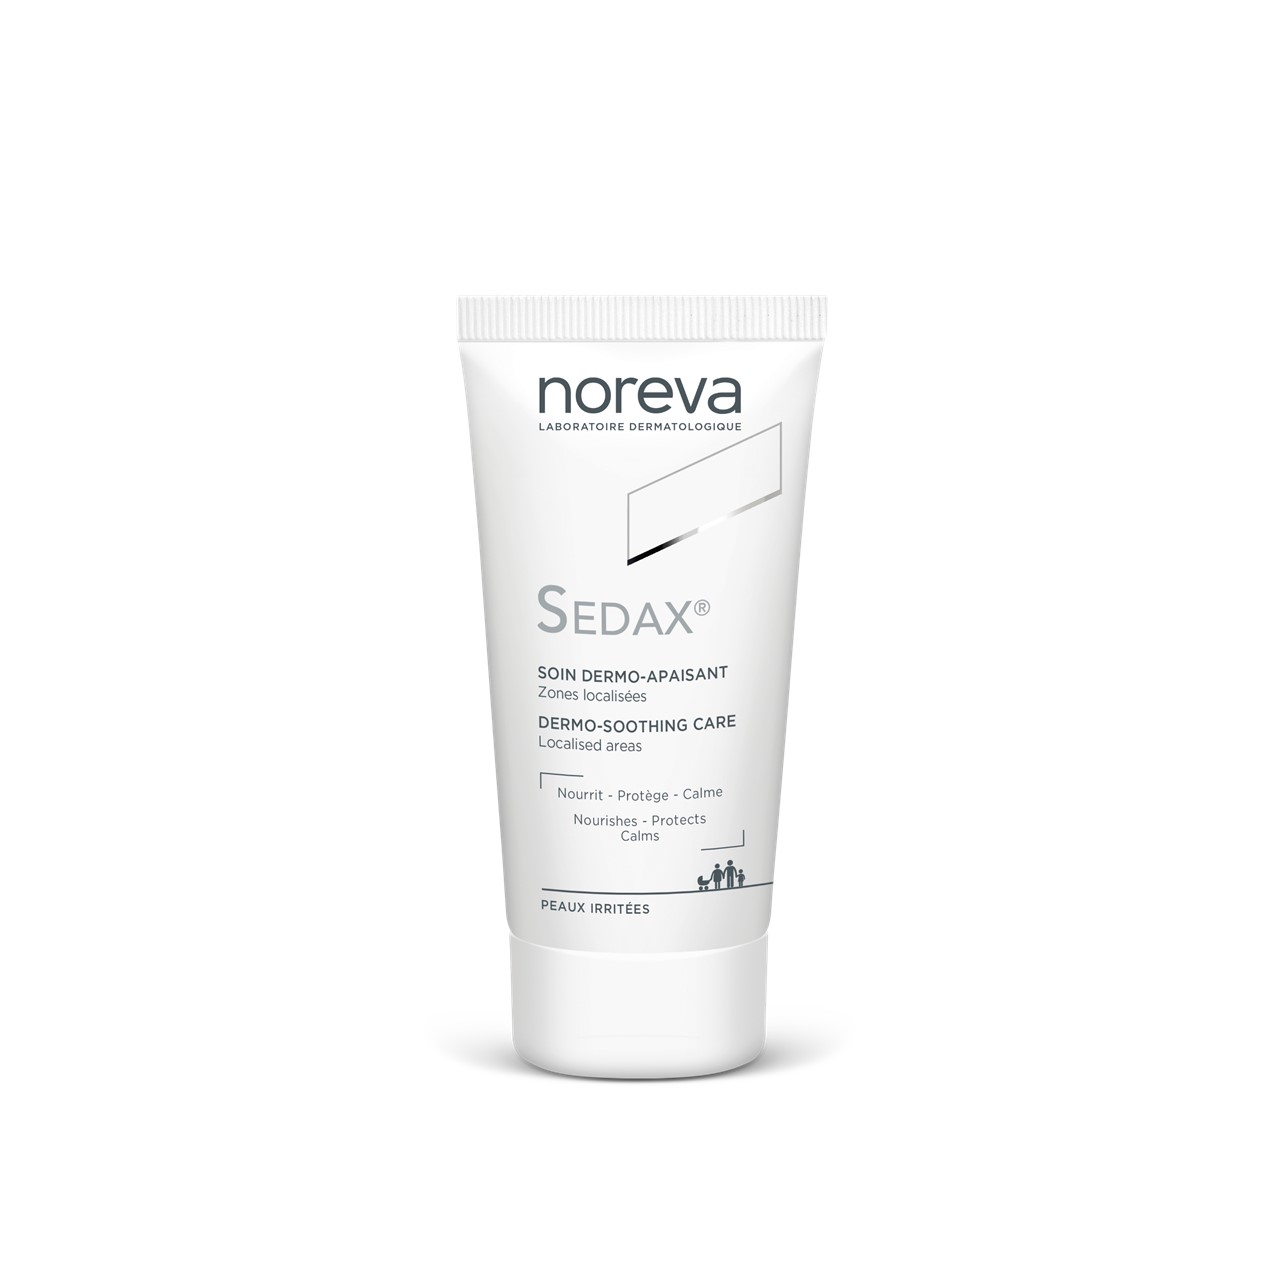 Noreva Sedax Dermo-Soothing Care Cream 30ml (1.01fl oz)